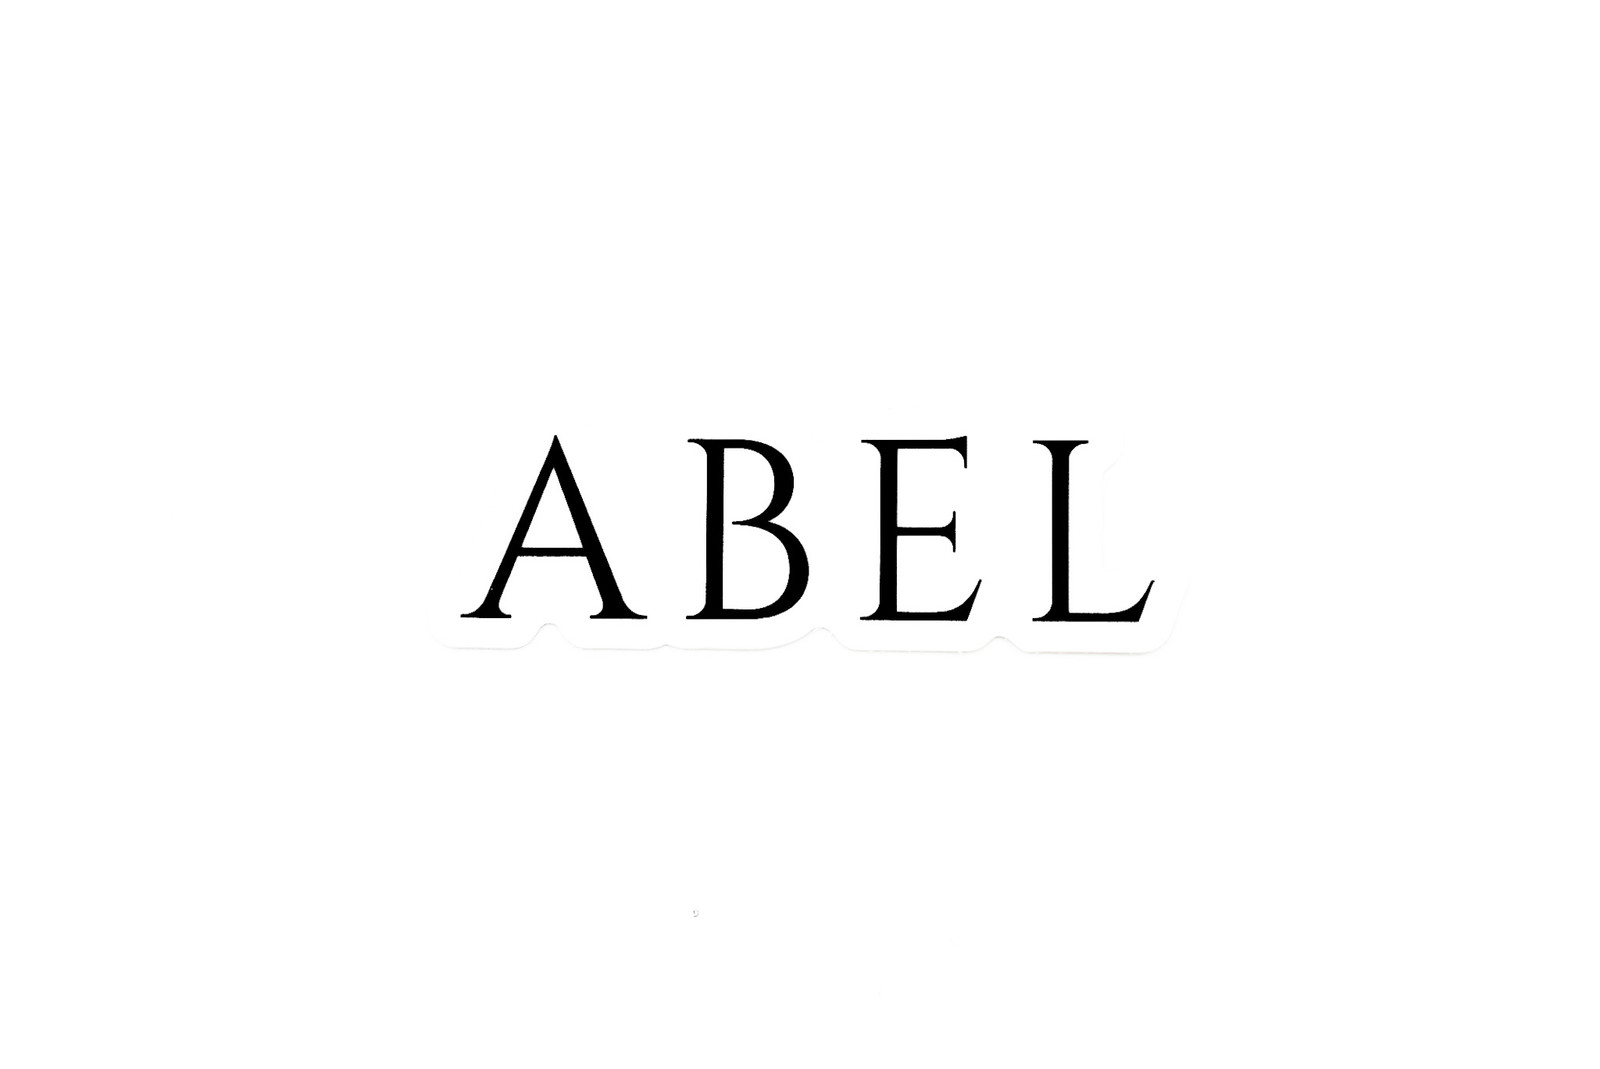 Abel Company brand sticker on white background, black ABEL typeface on white contrast